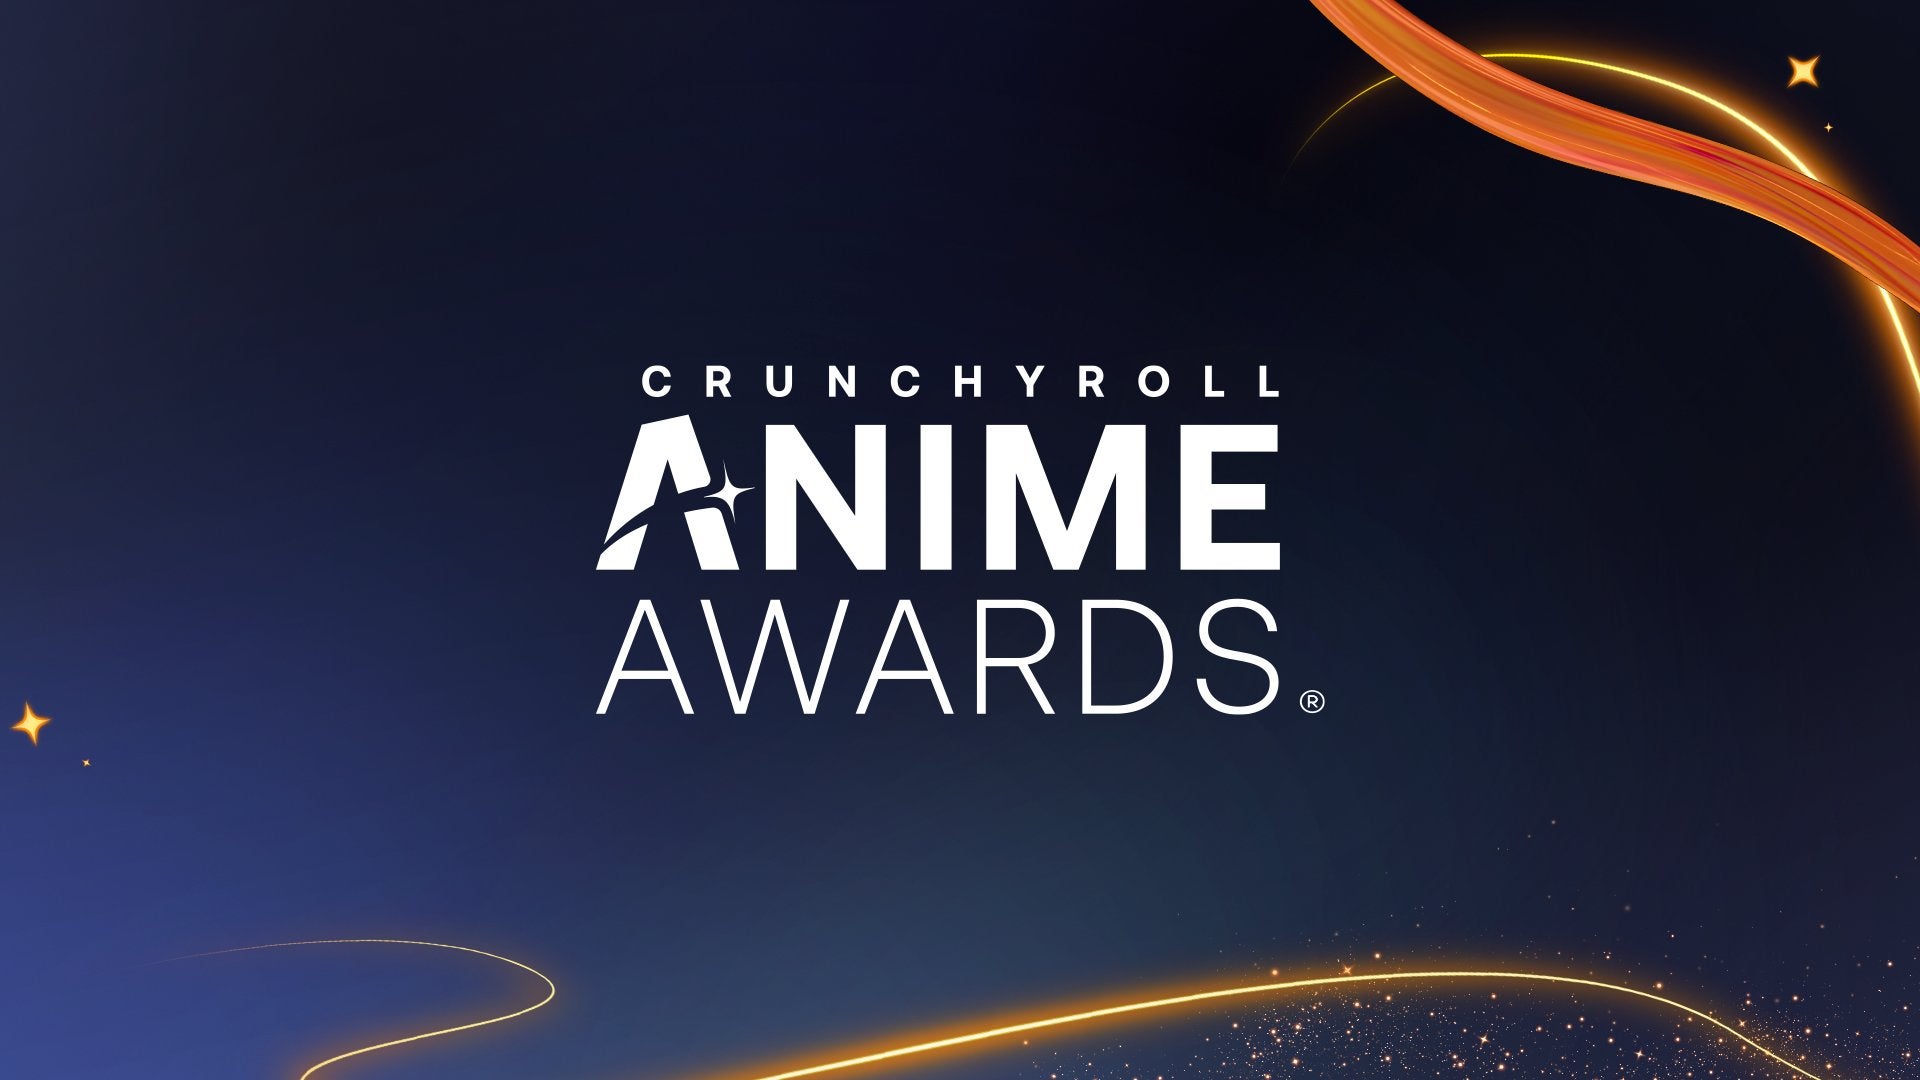 Graphic for the Crunchyroll Anime Awards